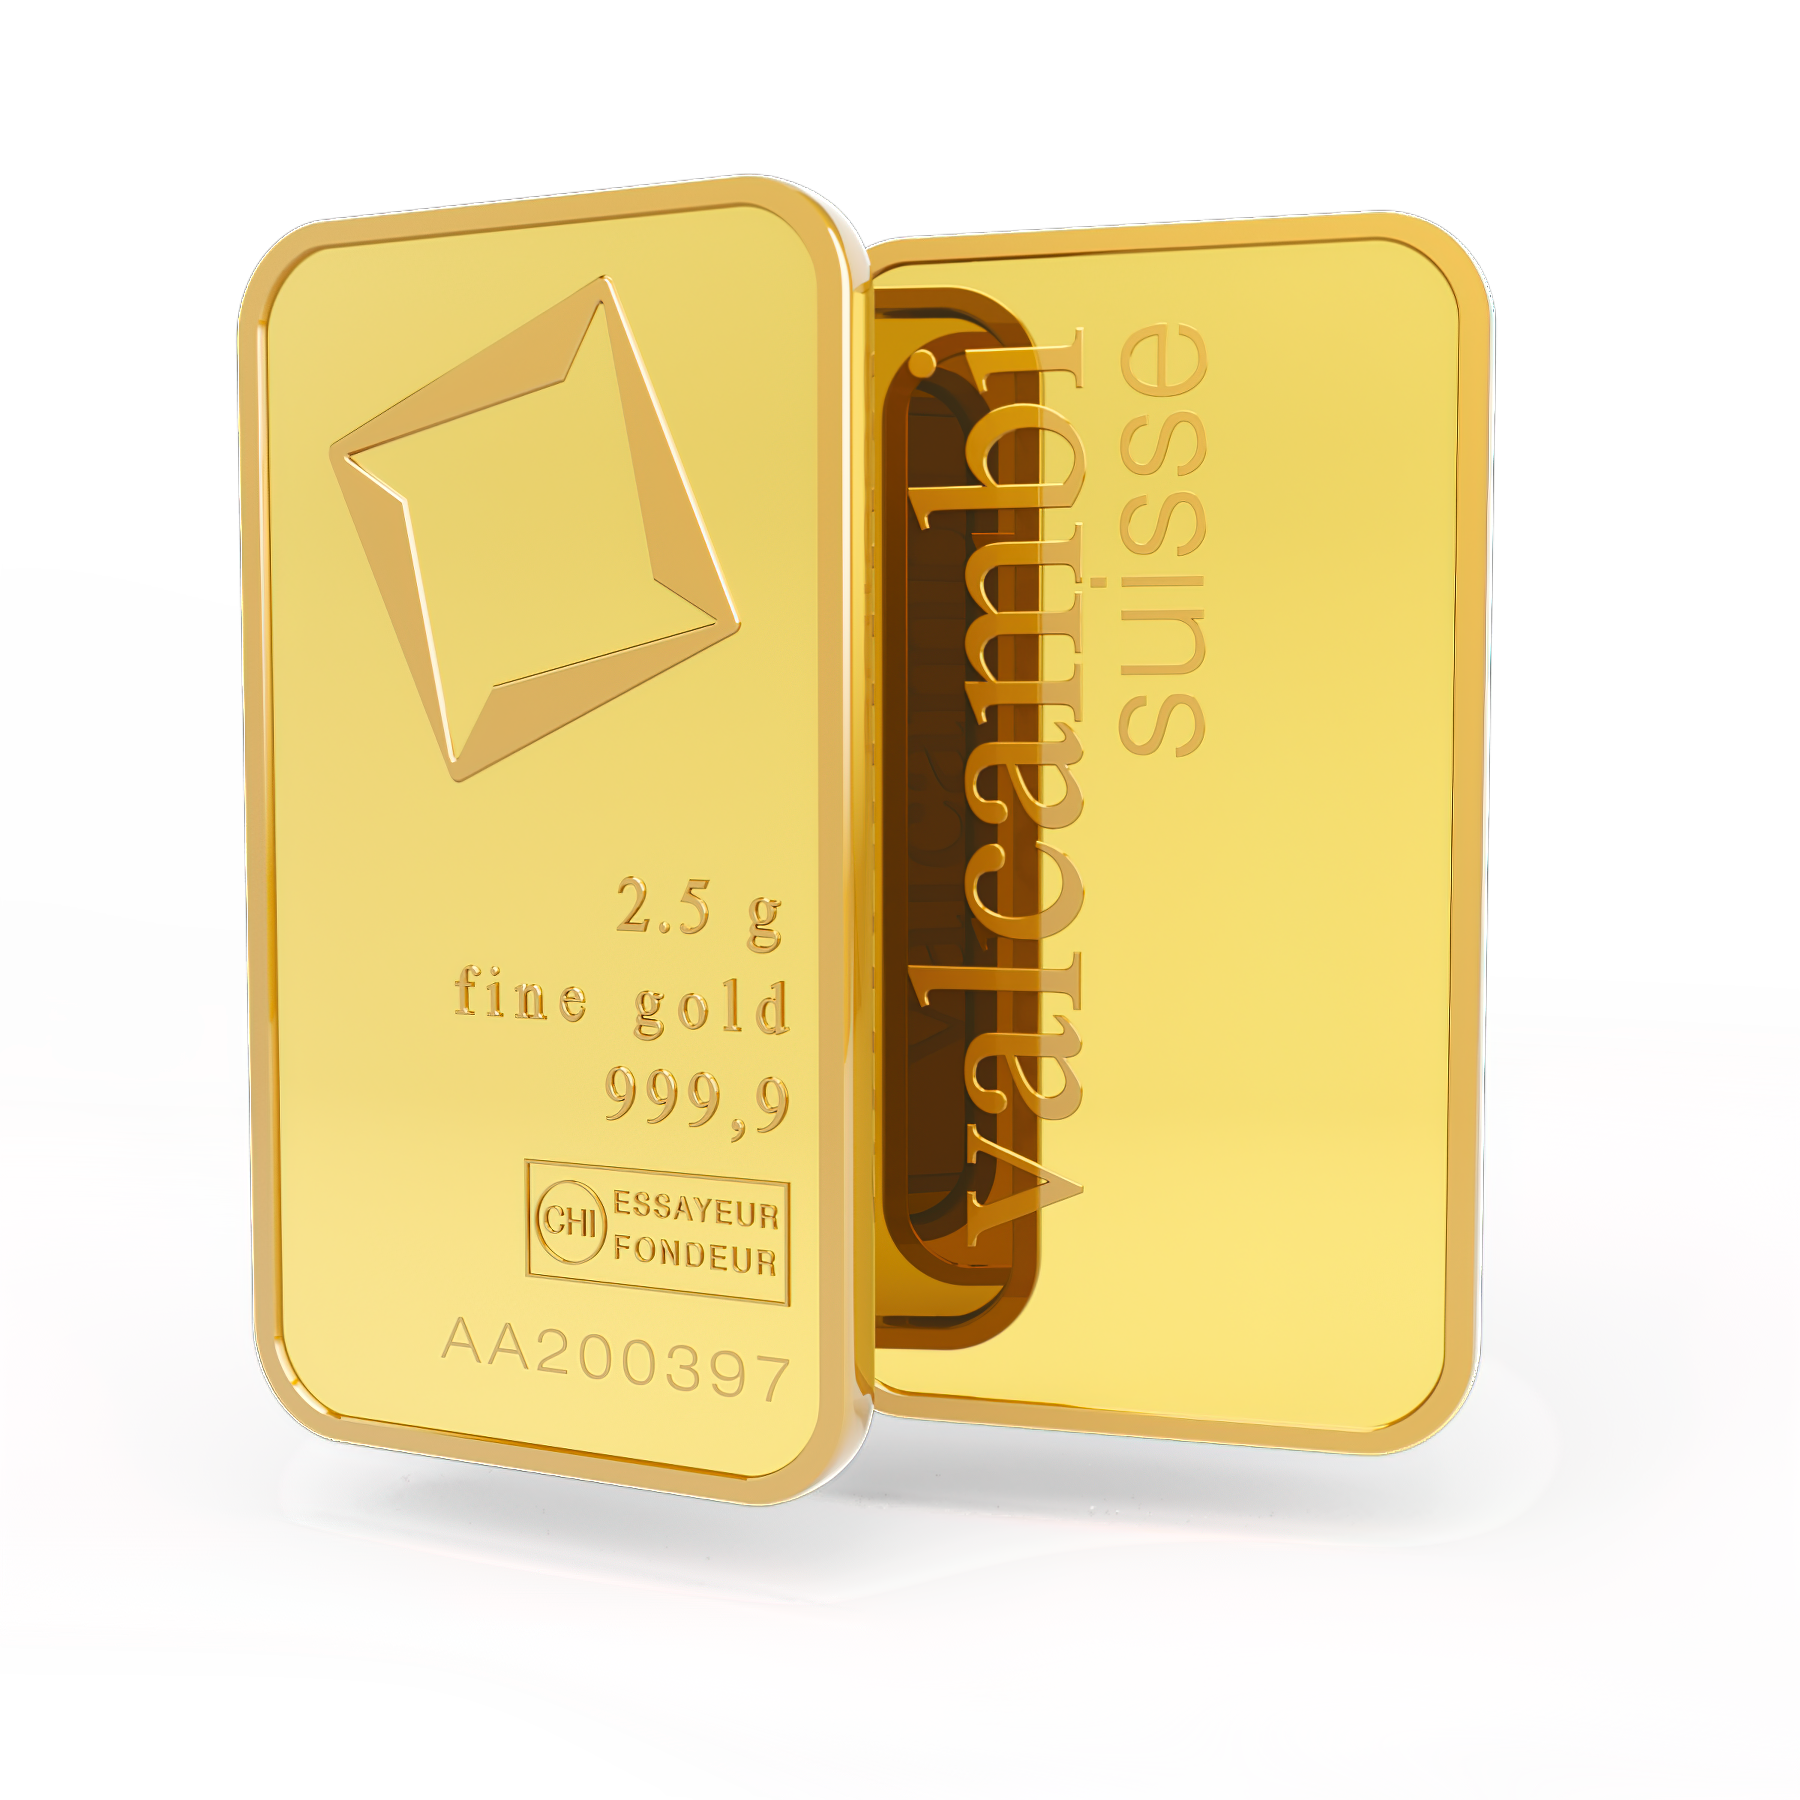 Lingou aur 2,5g, Elvetia, Fine Gold, 999,9